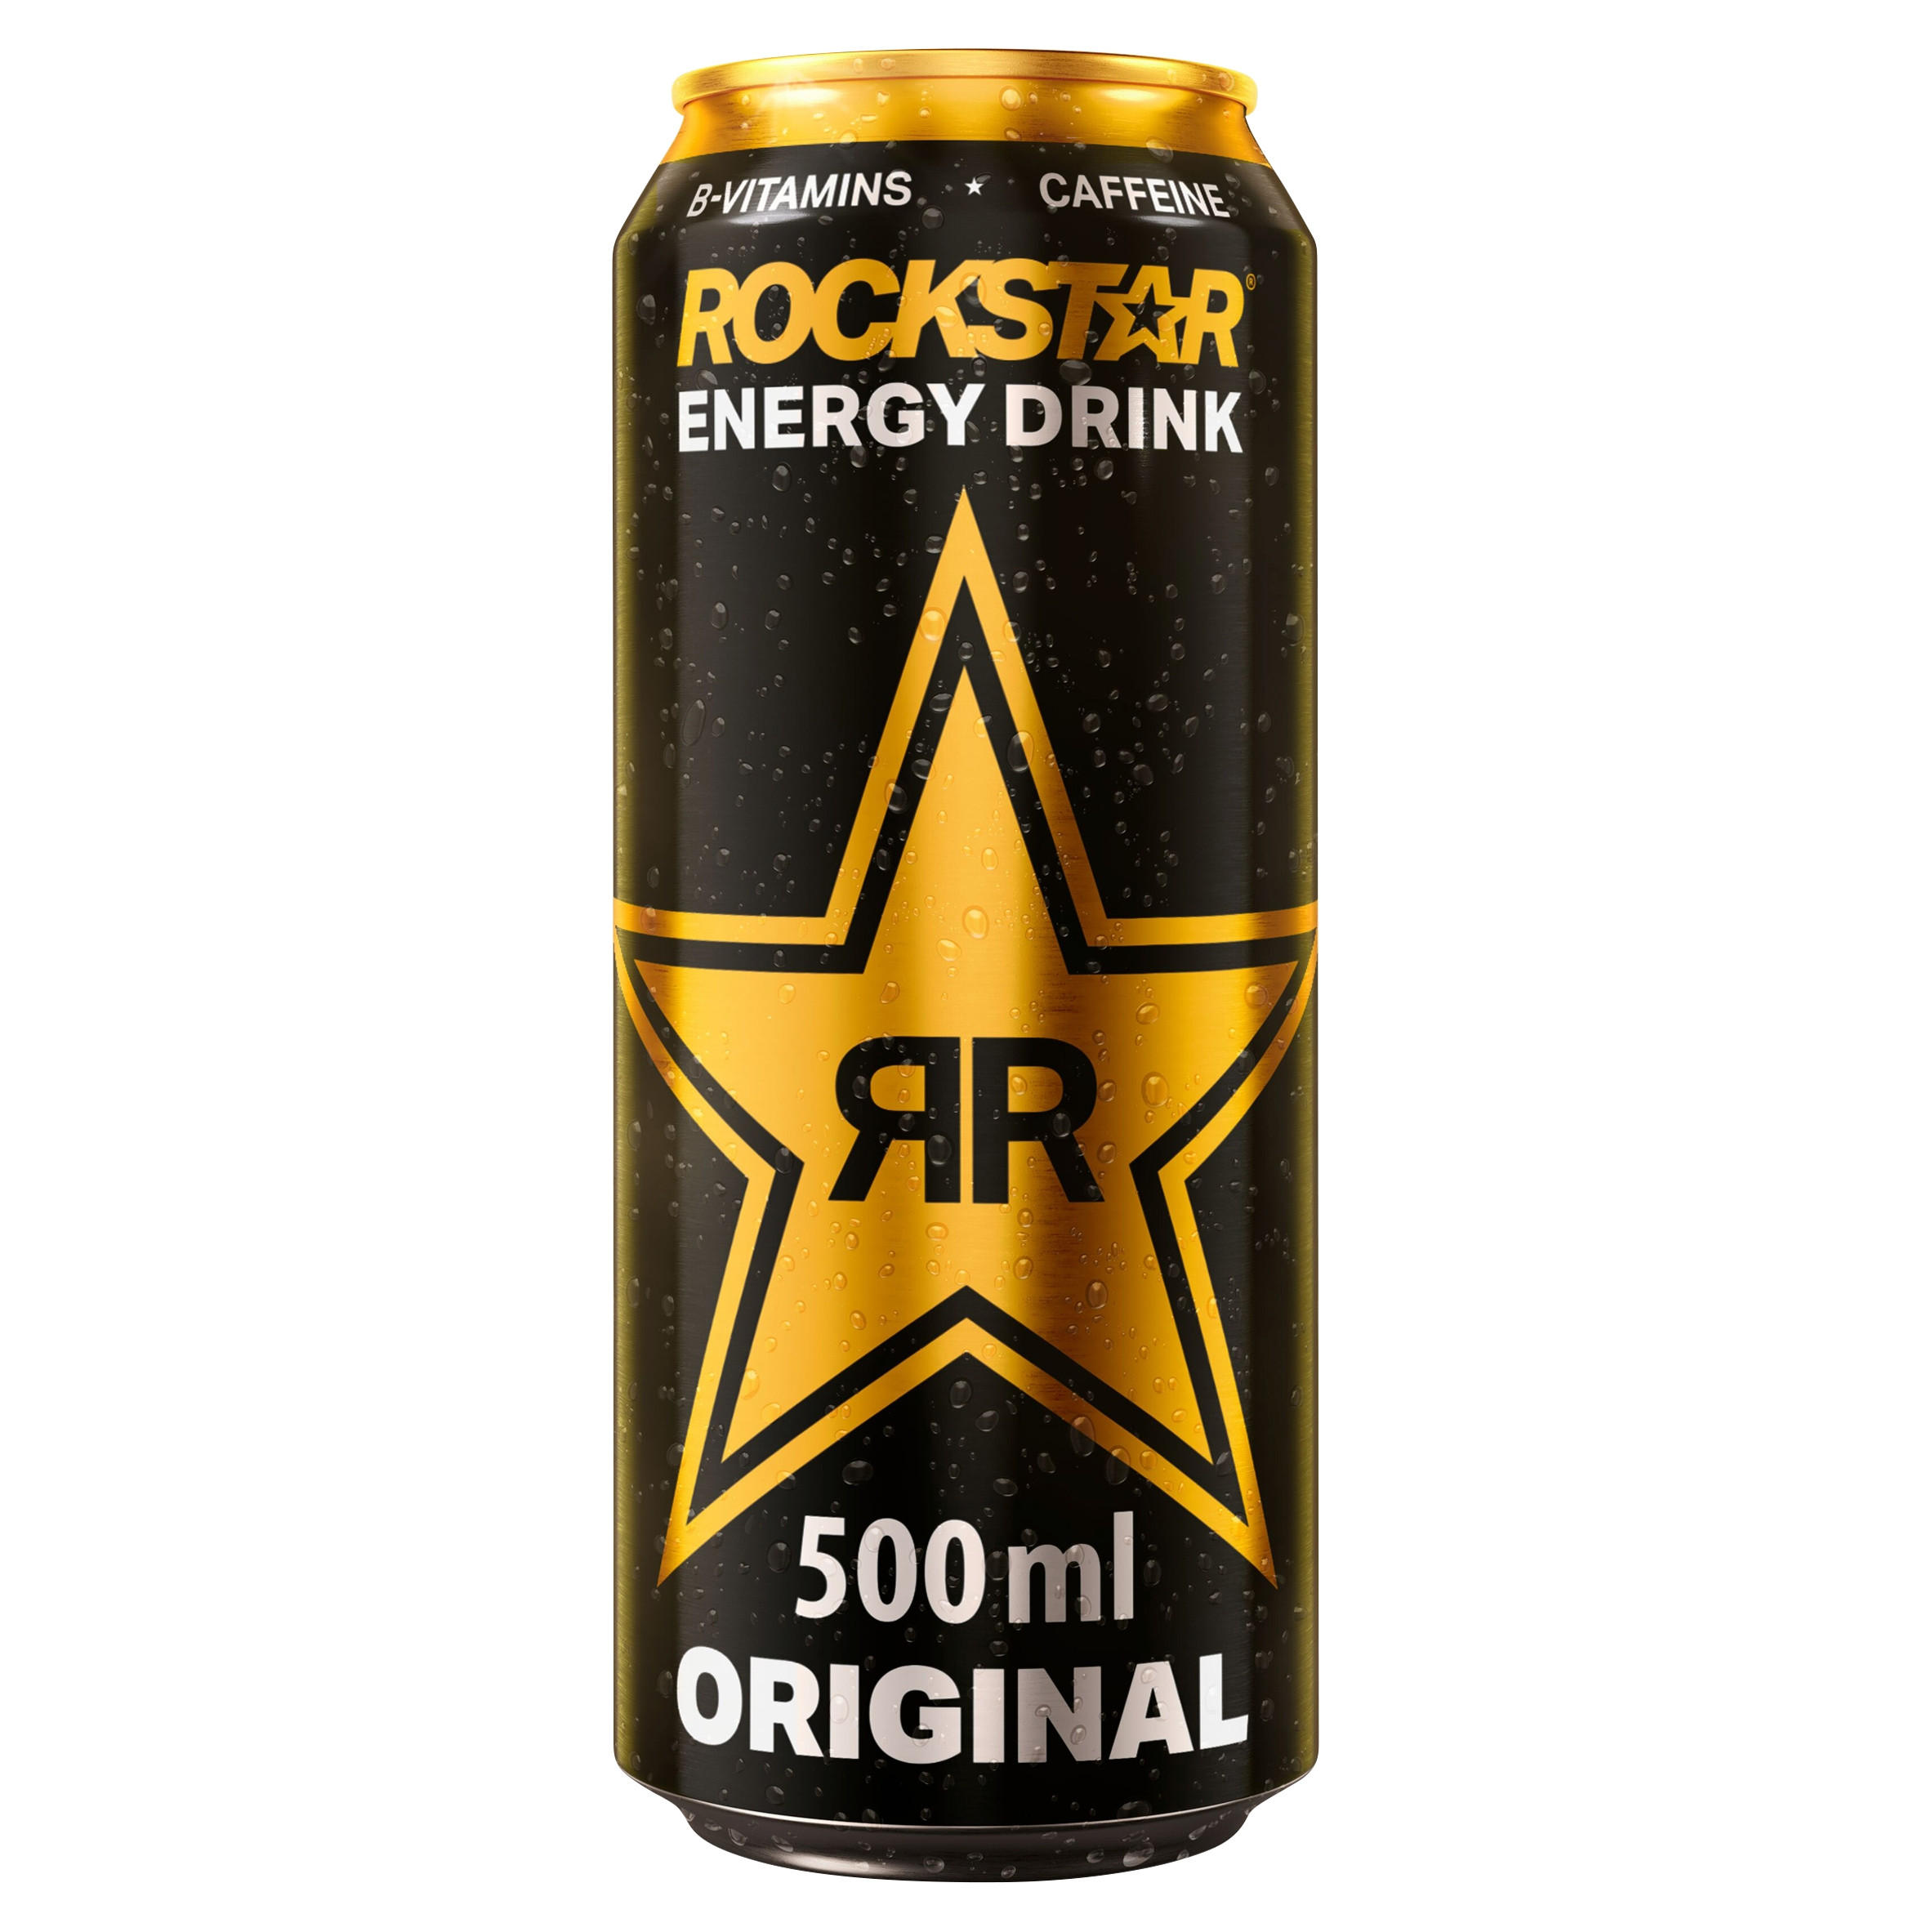 Rockstar Energy Drink UK&I